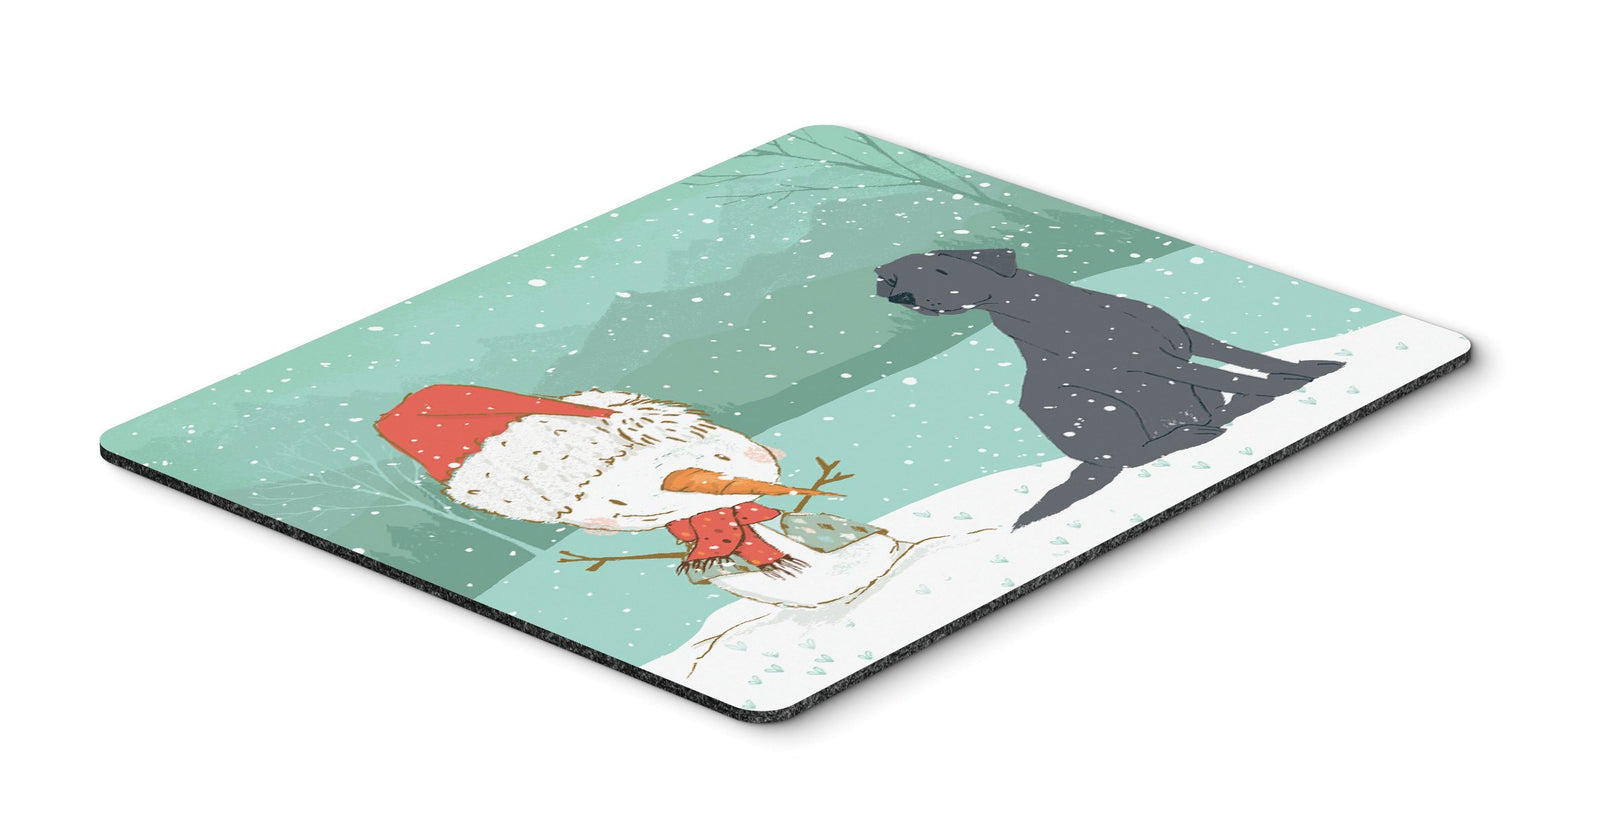 Black Labrador Snowman Christmas Mouse Pad, Hot Pad or Trivet CK2047MP by Caroline's Treasures